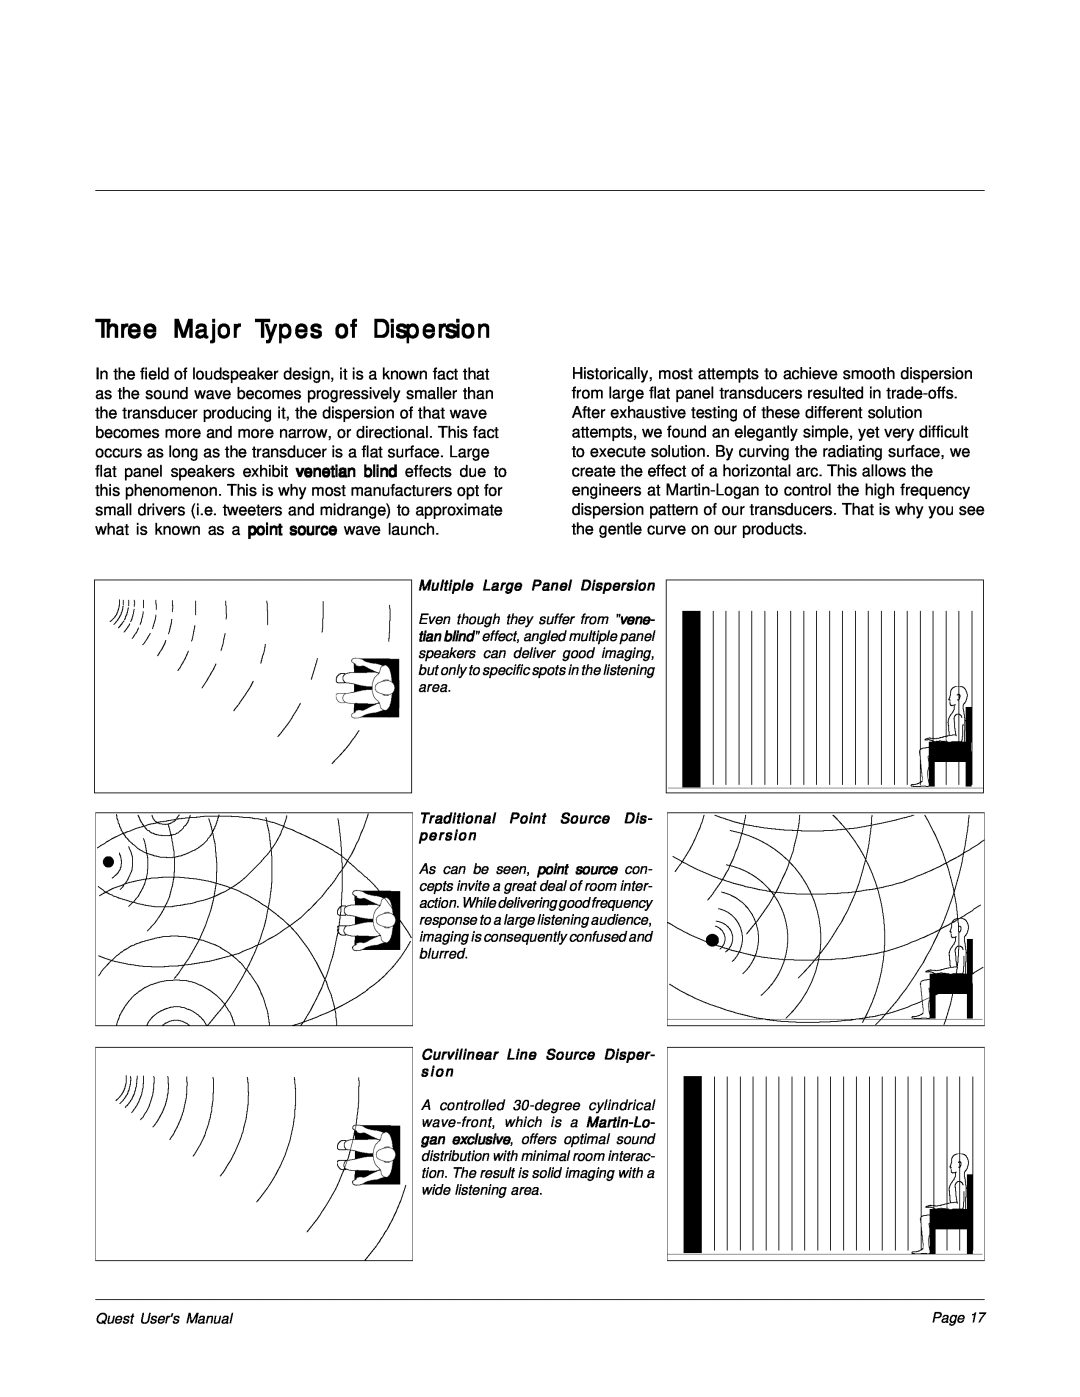 MartinLogan The Quest Speaker System user manual Three Major Types of Dispersion, Multiple Large Panel Dispersion 